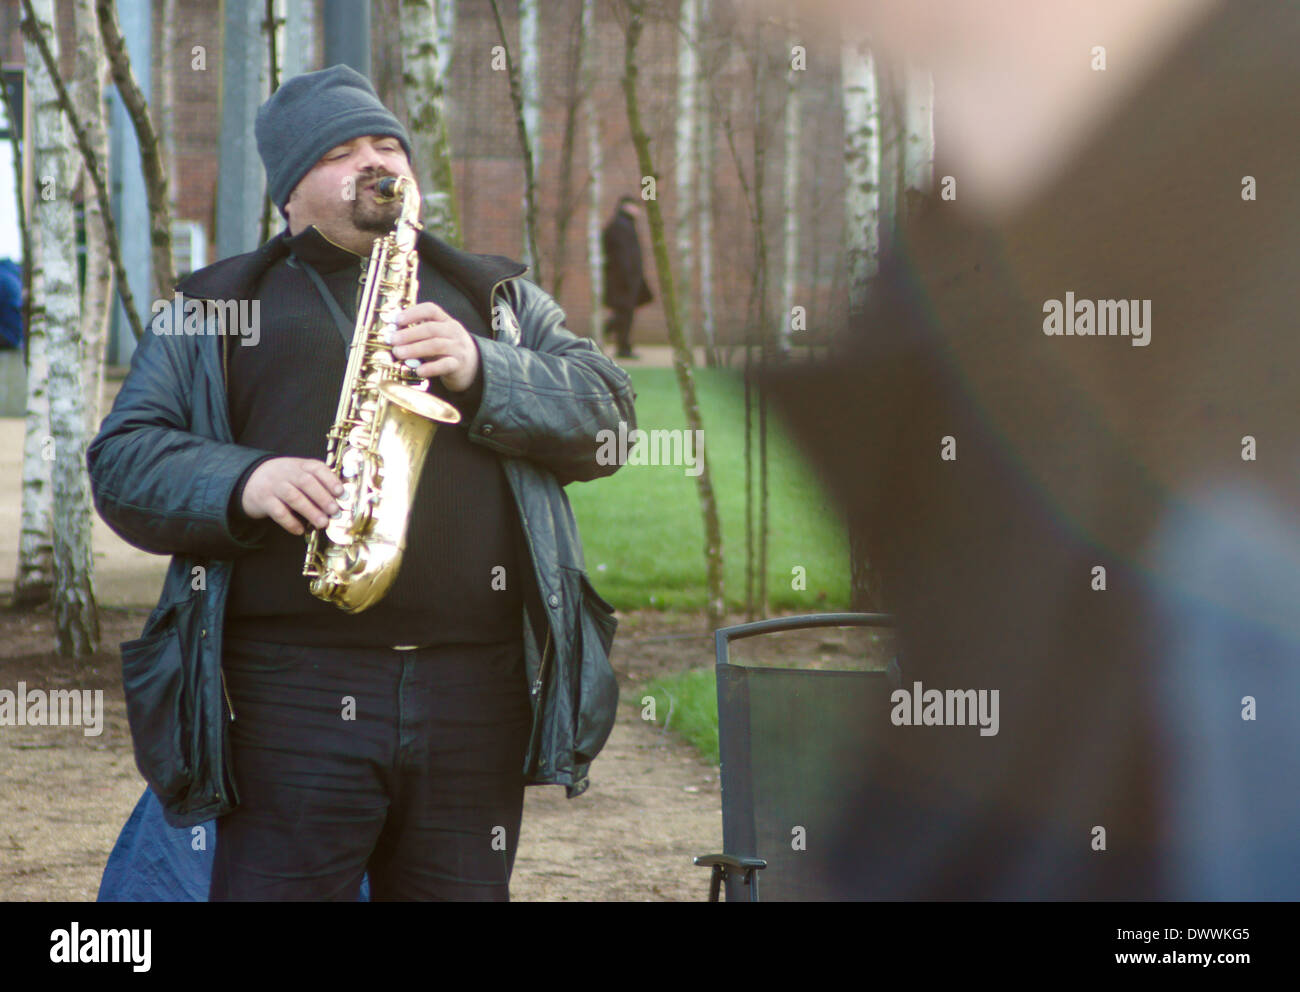 street musician in London. Saxophone player on street Stock Photo